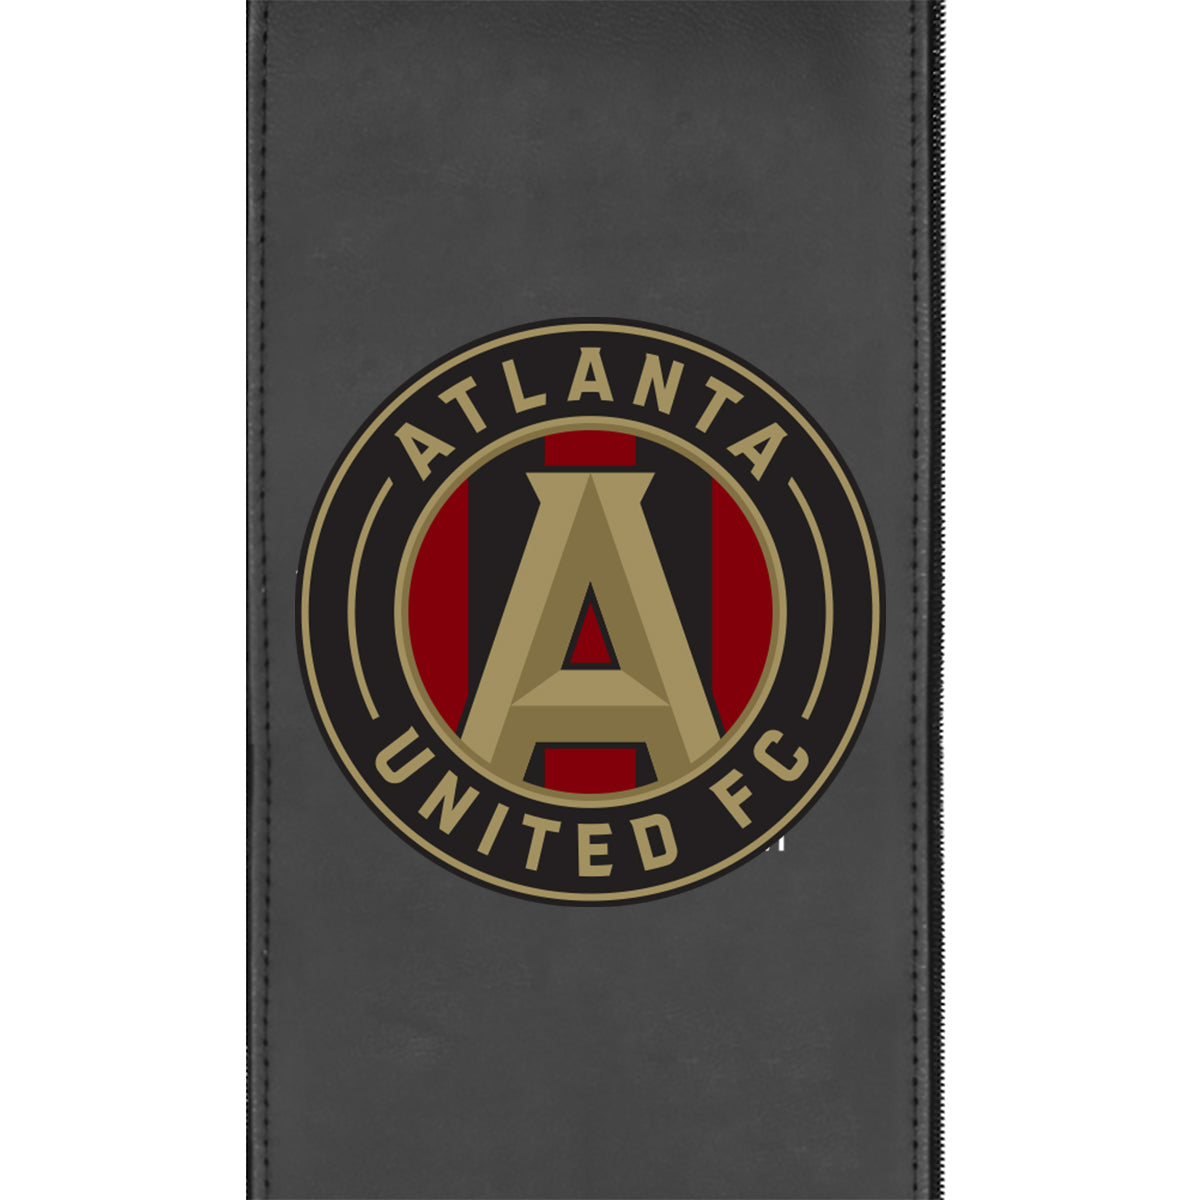 Curve Task Chair with Atlanta United FC Logo